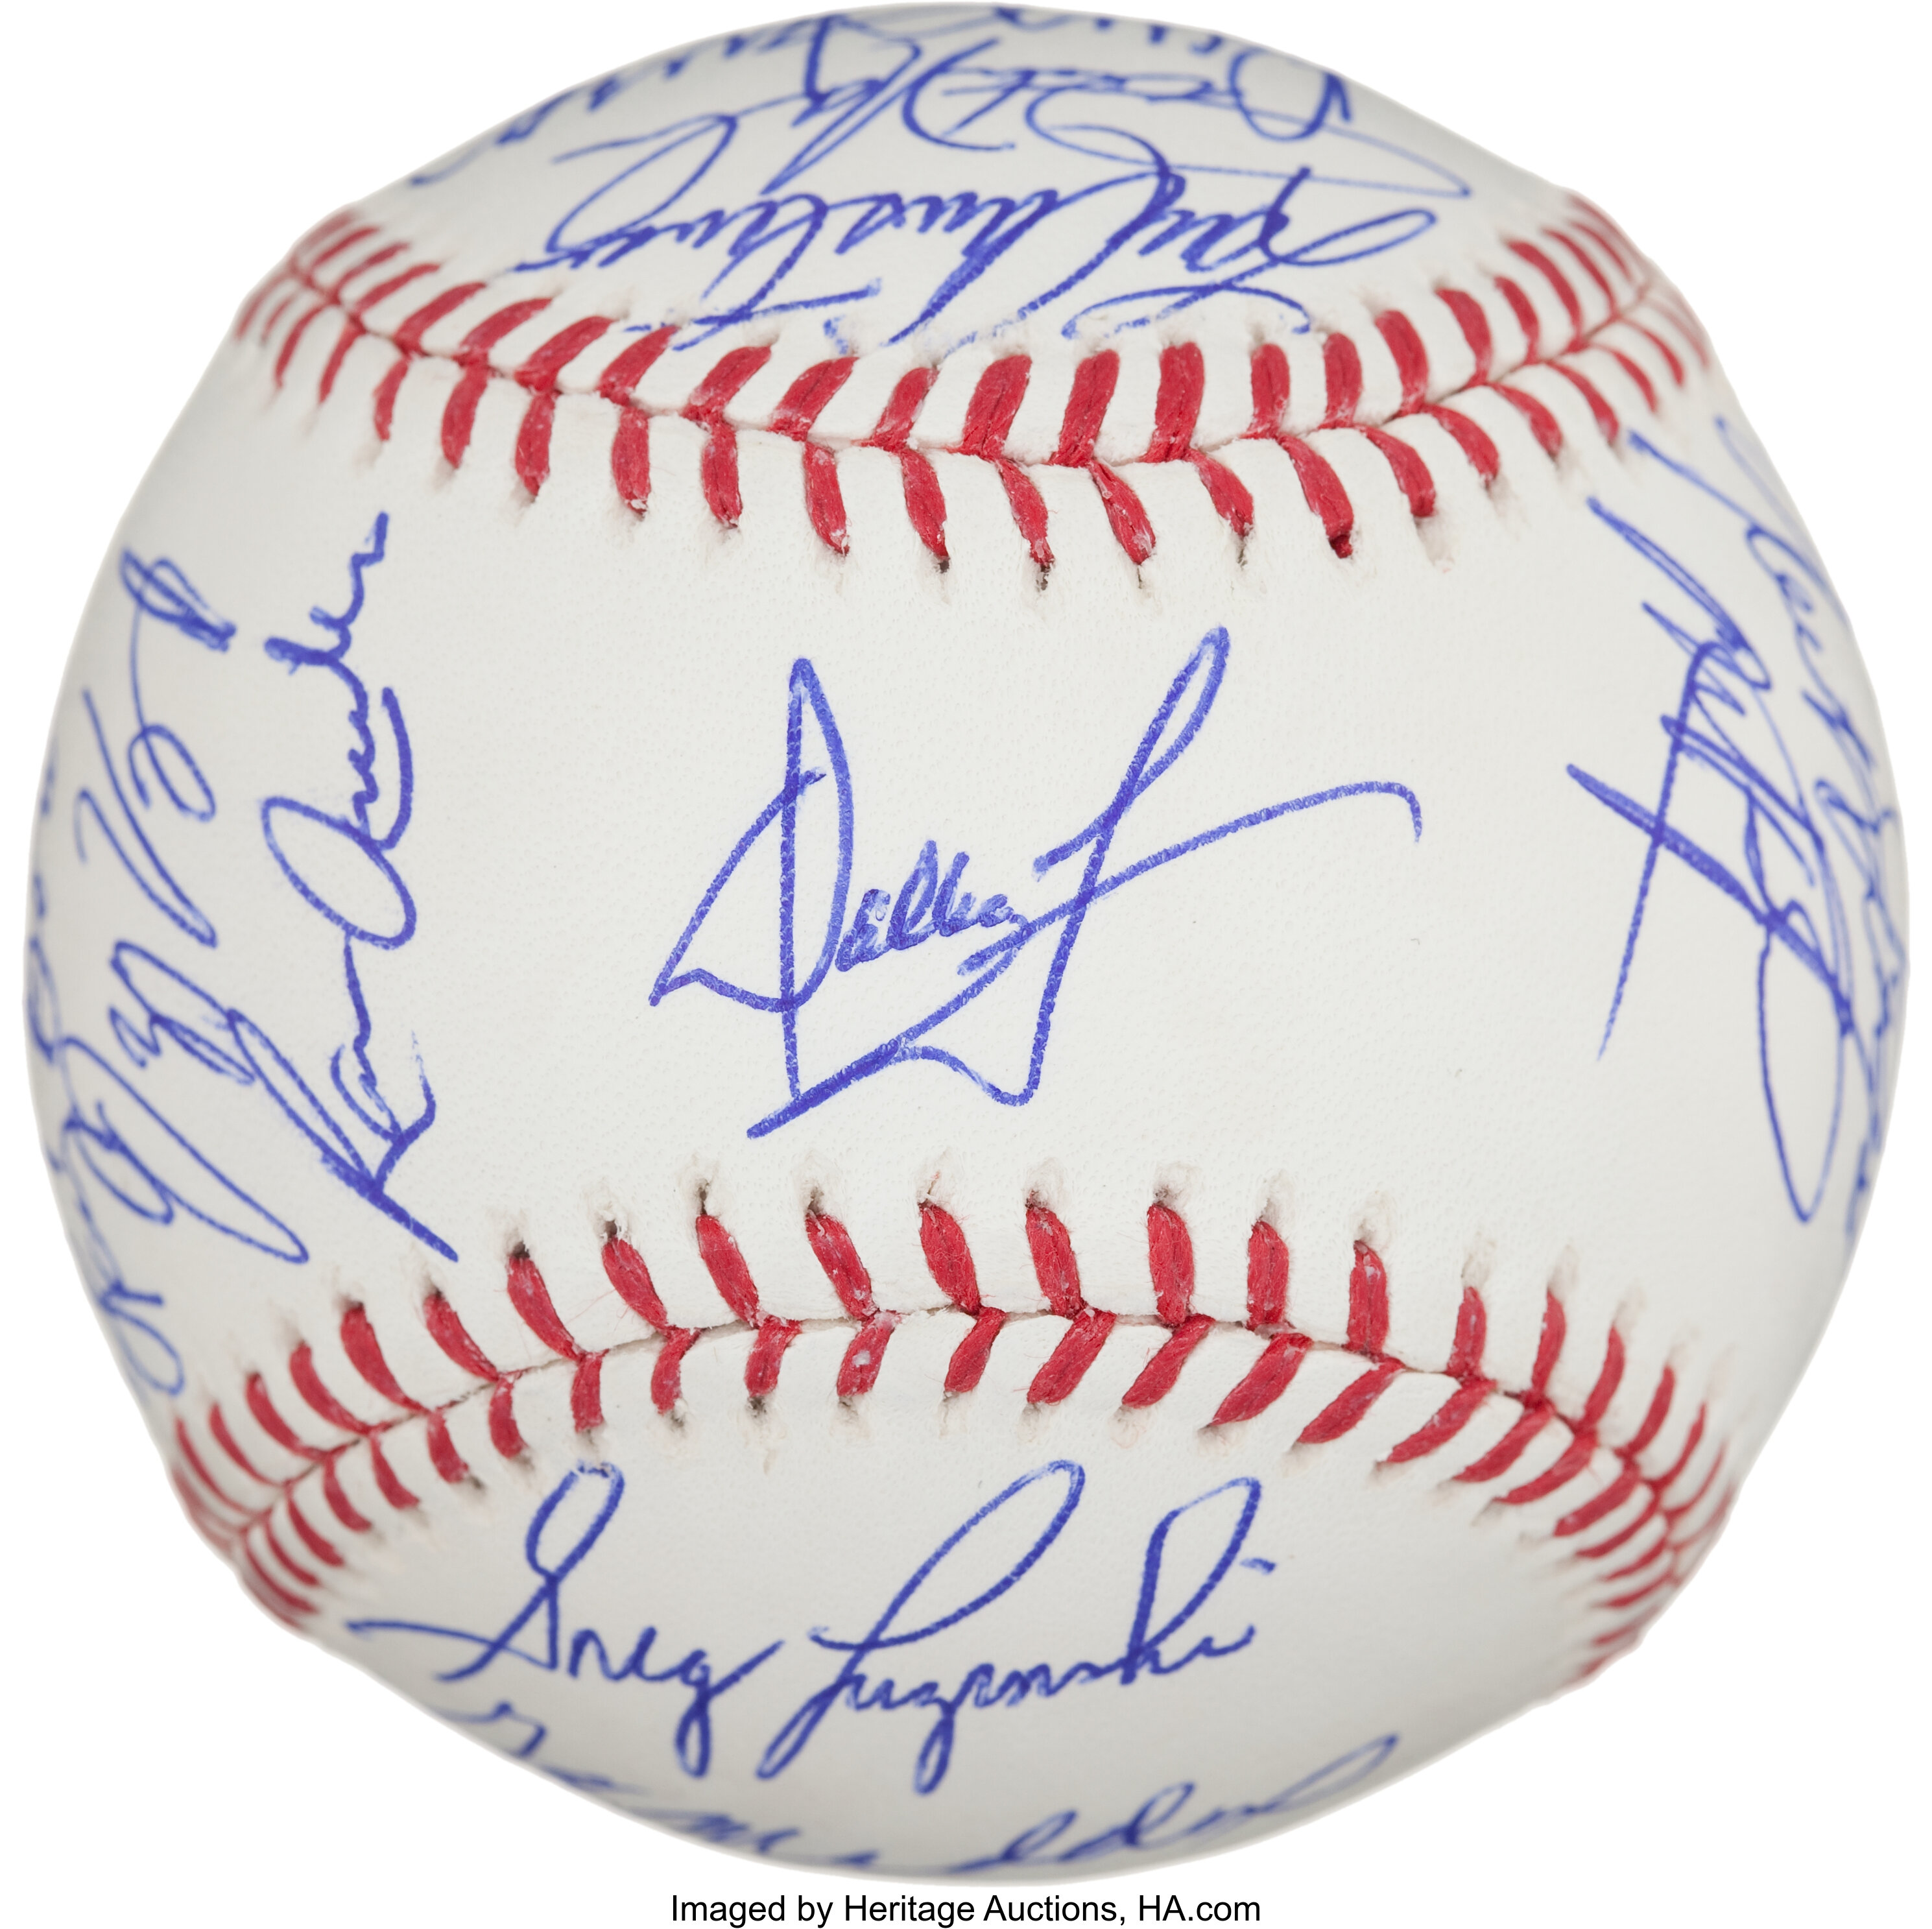 Sold at Auction: 1980 World Series champion Philadelphia Phillies reunion  team signed baseball.